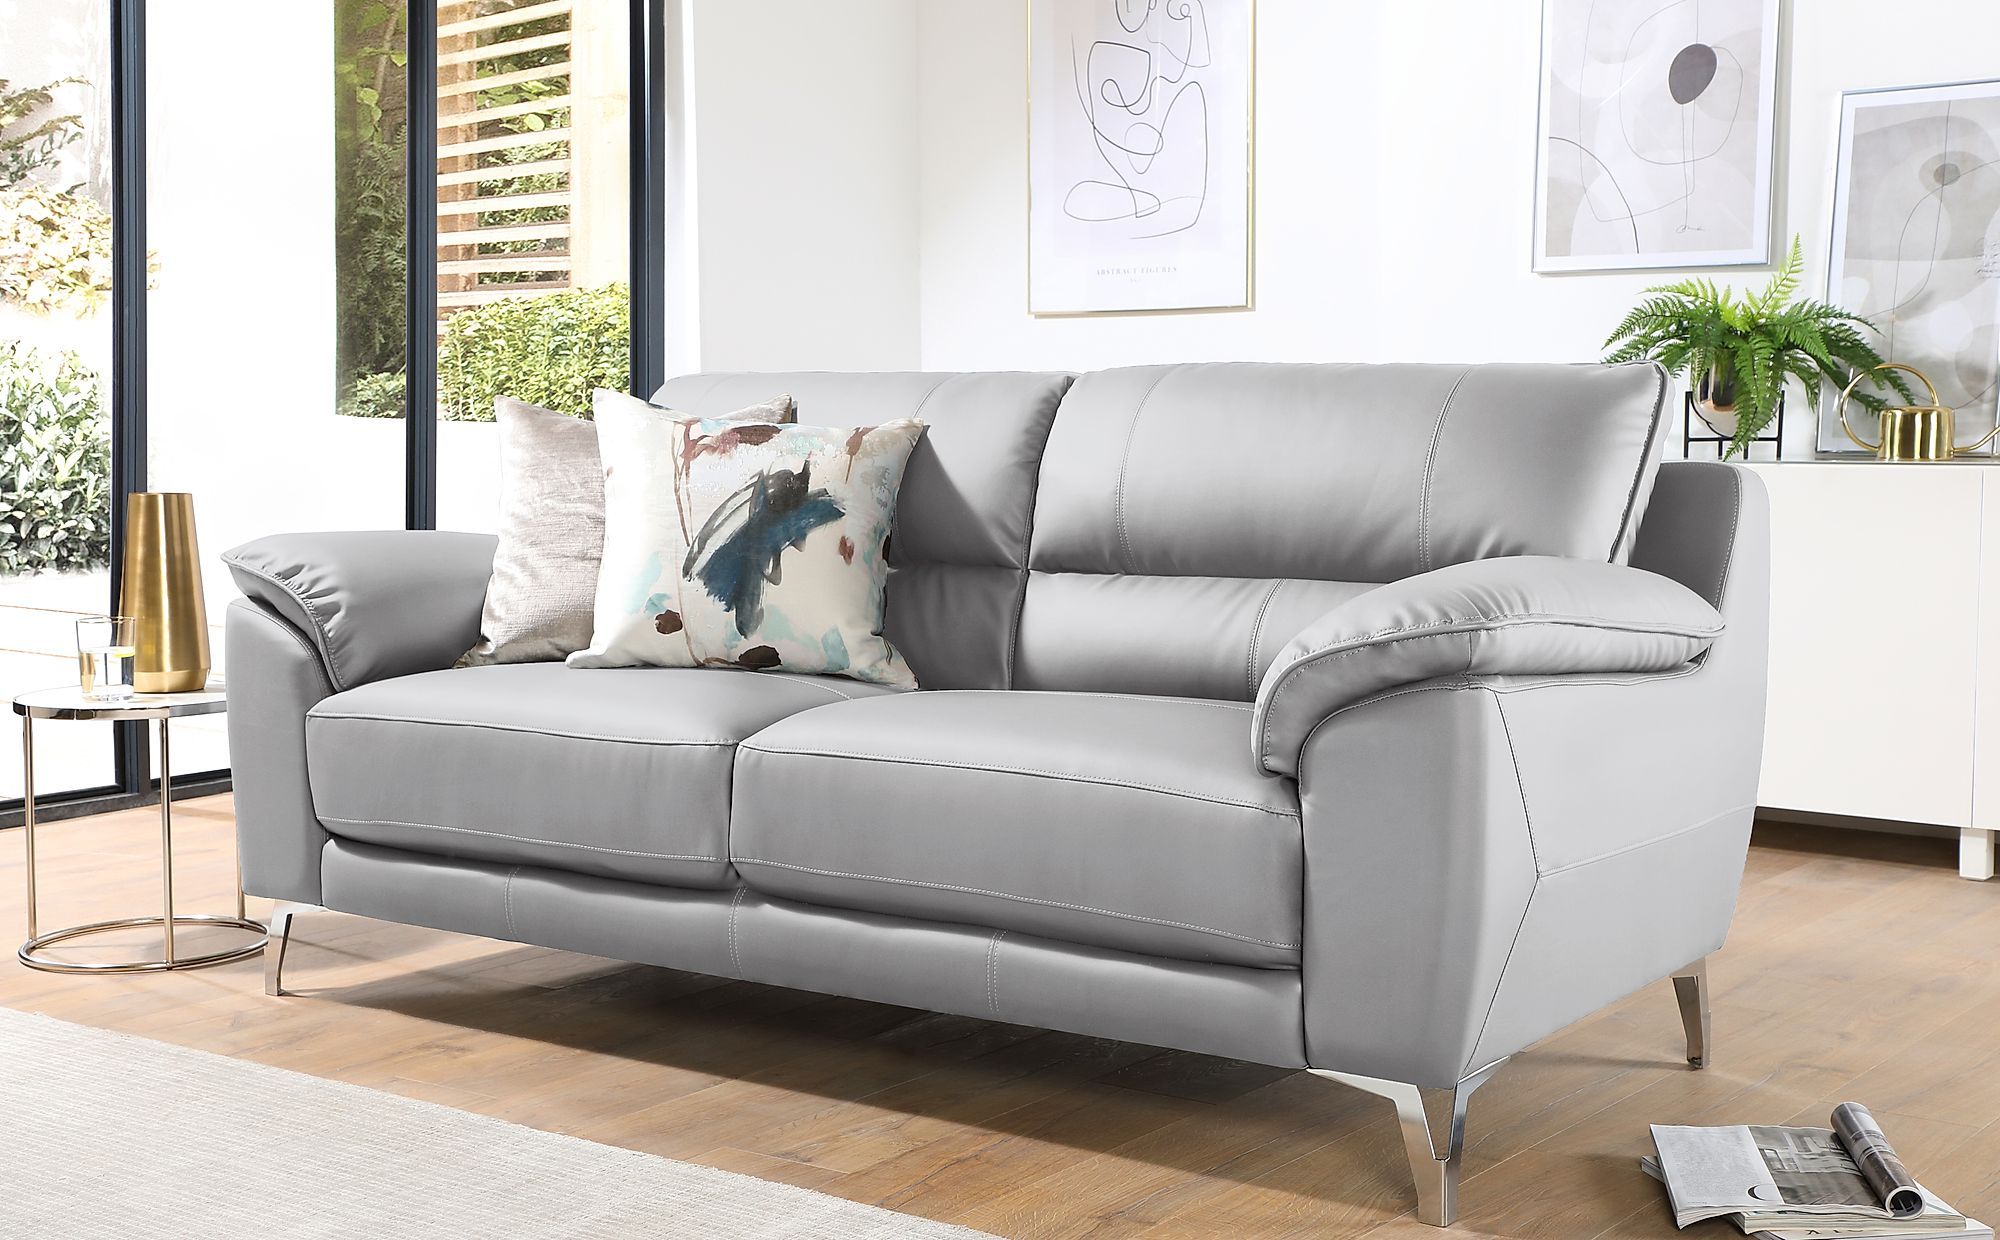 Madrid Light Grey Leather 3 Seater Sofa | Furniture Choice Regarding Sofas In Light Grey (Gallery 1 of 20)